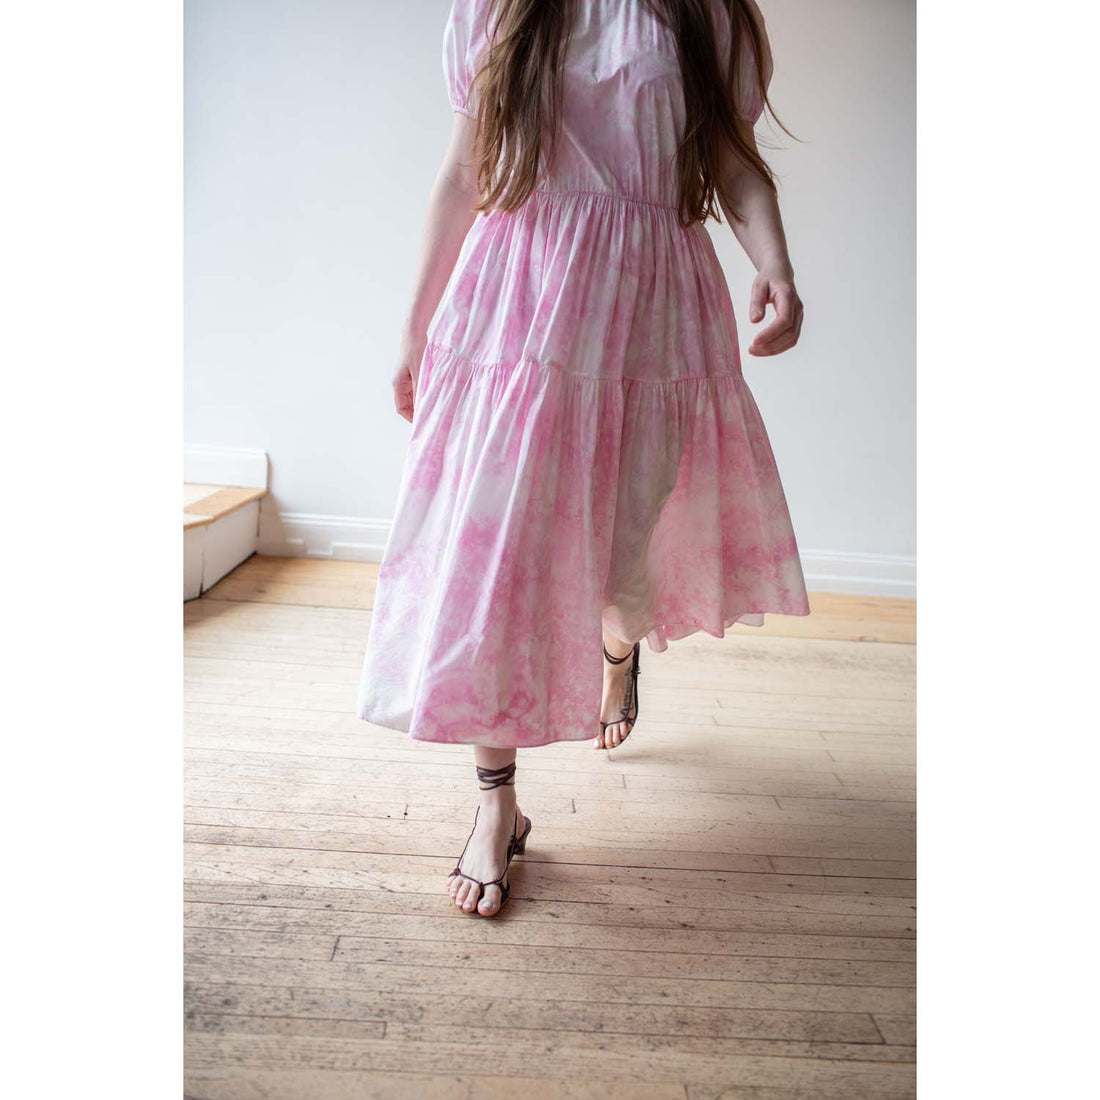 Fabiana Pigna Candela Dress in Primrose Tie Dye